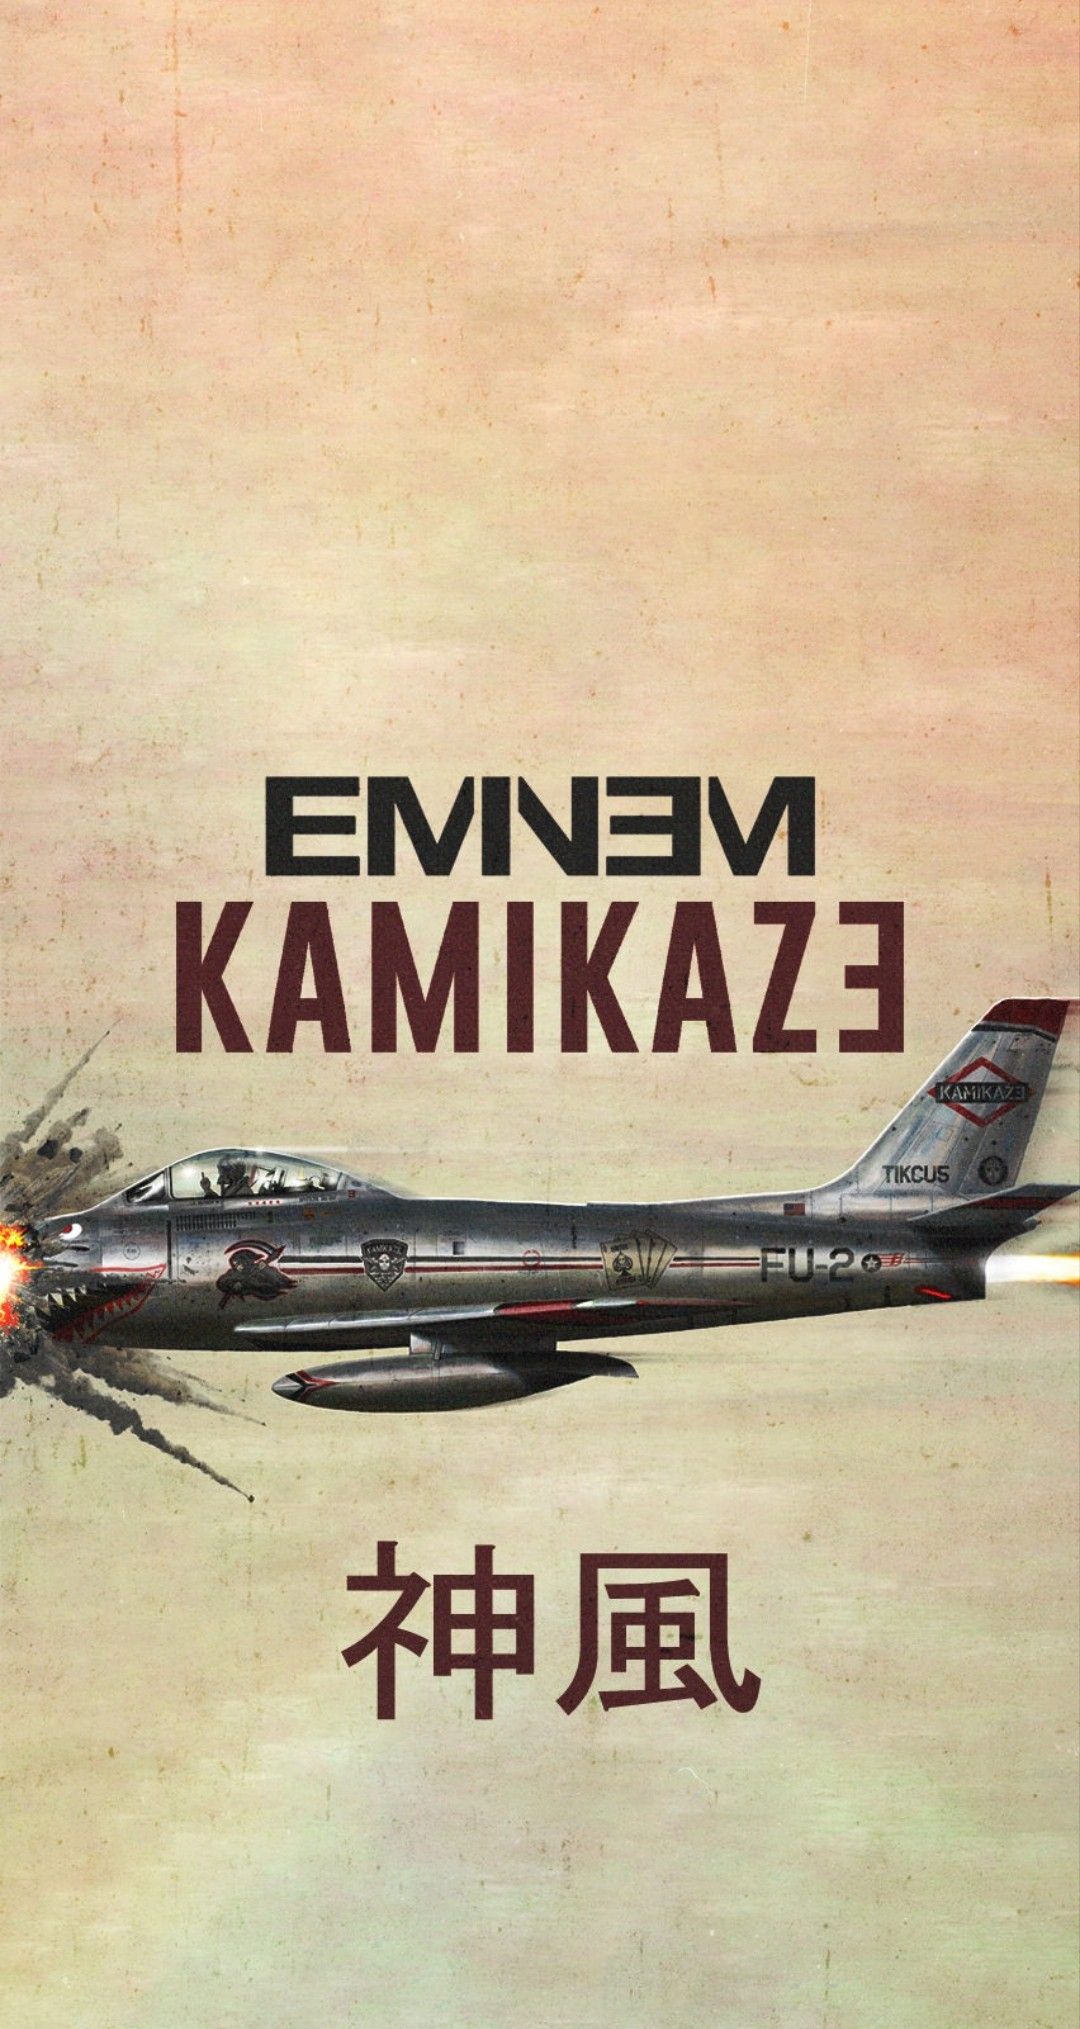 Eminem Kamikaze Wallpaper. Eminem wallpaper, Eminem wallpaper iphone, Eminem album covers